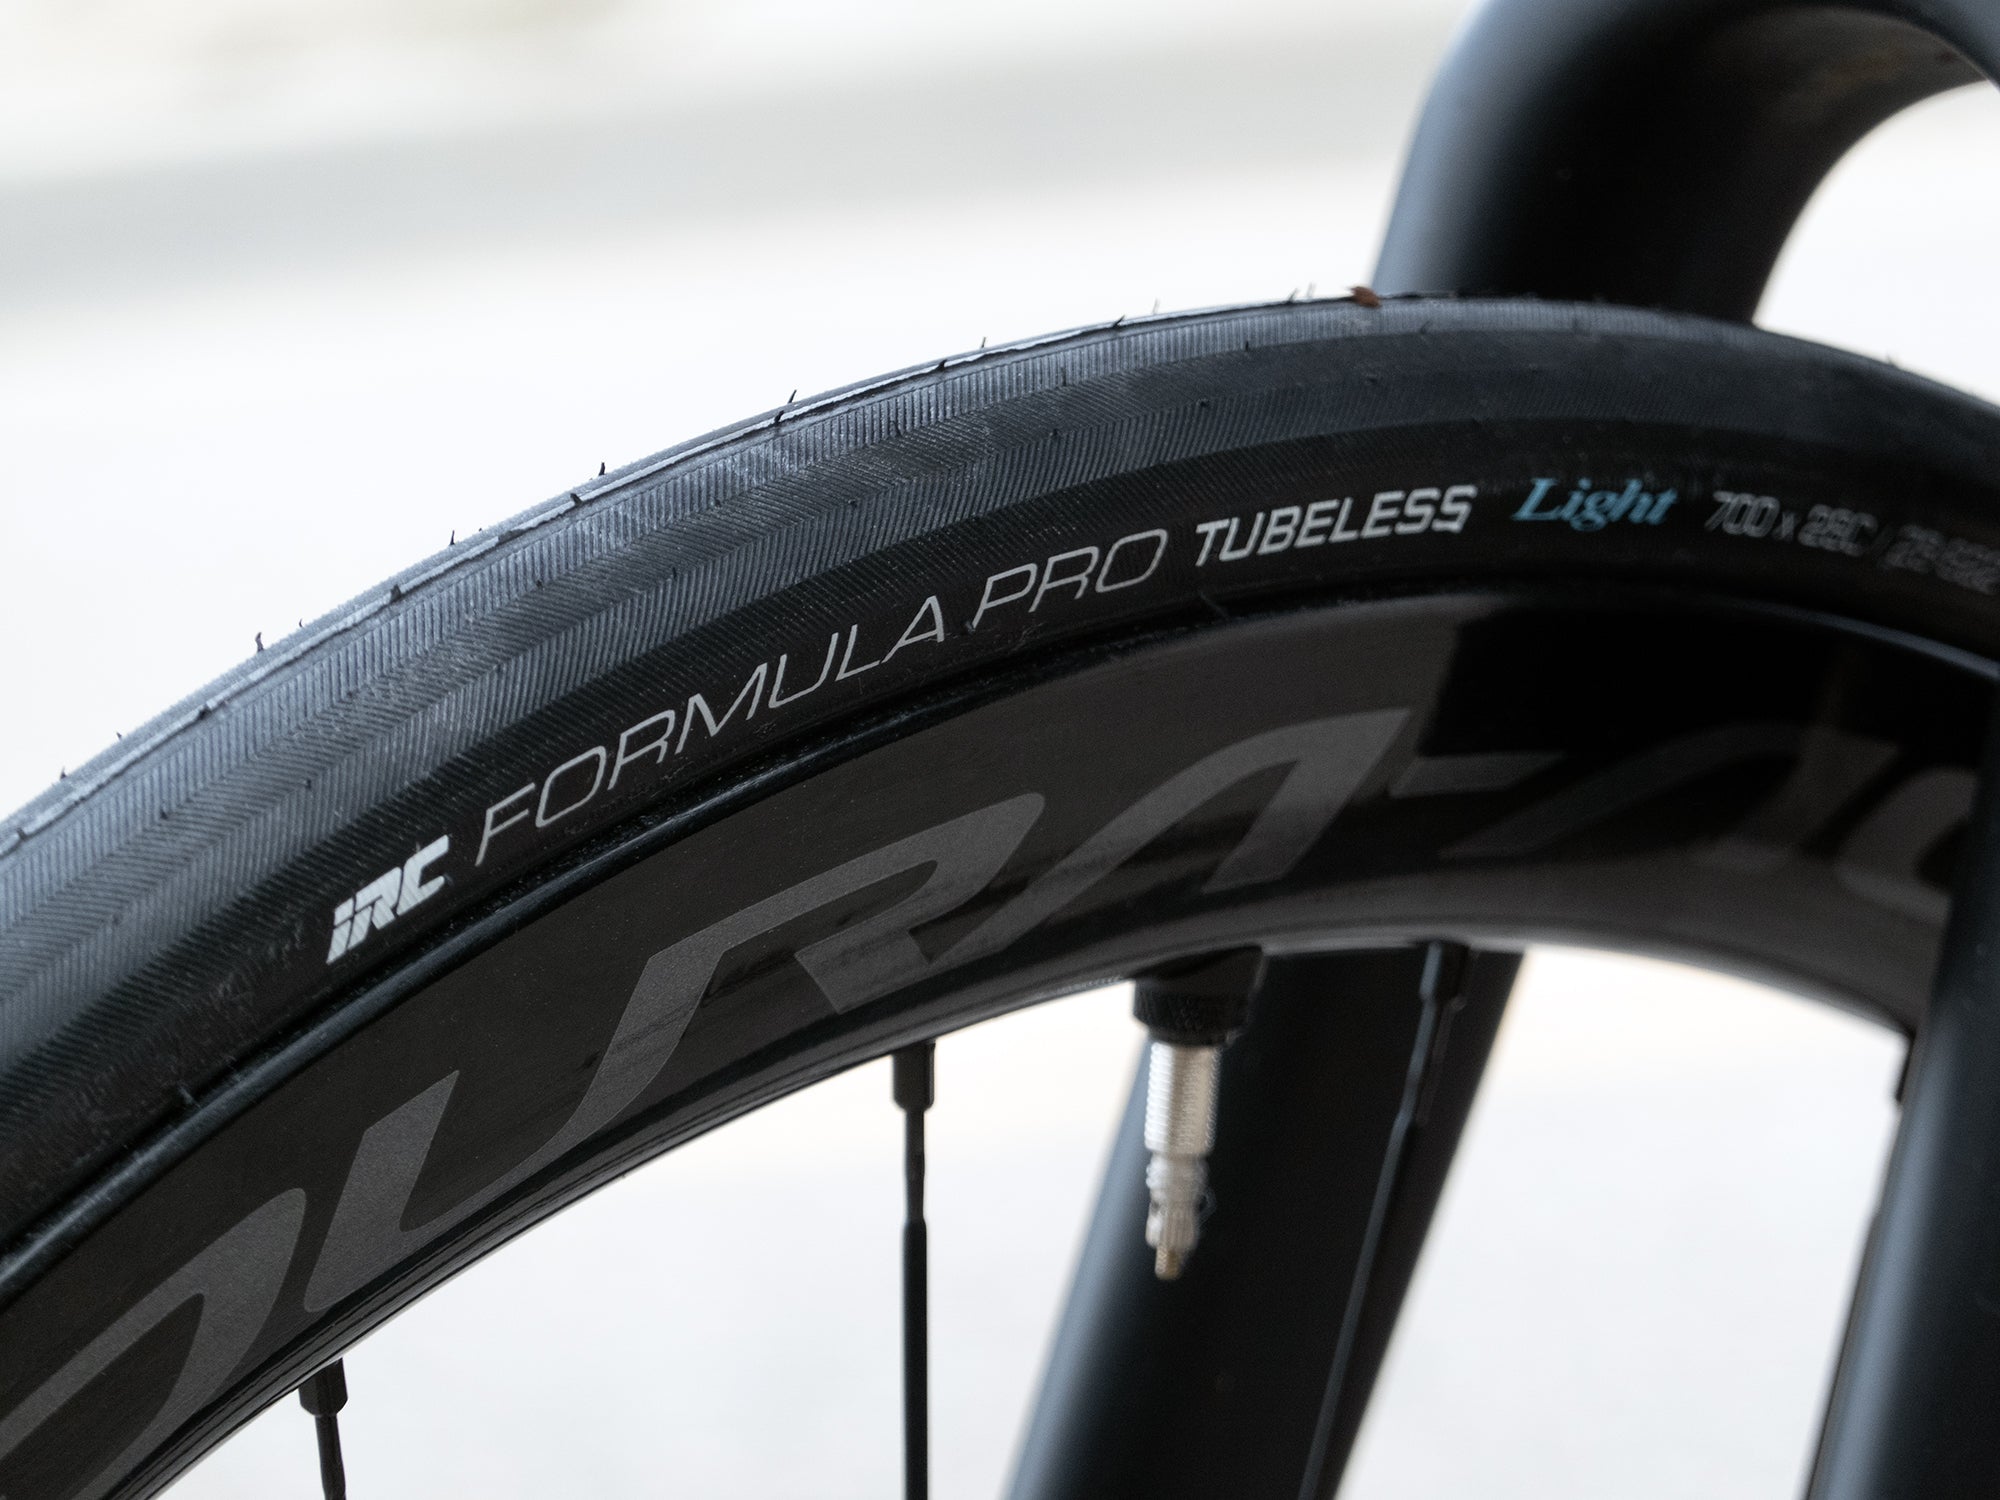 28c tubeless tires